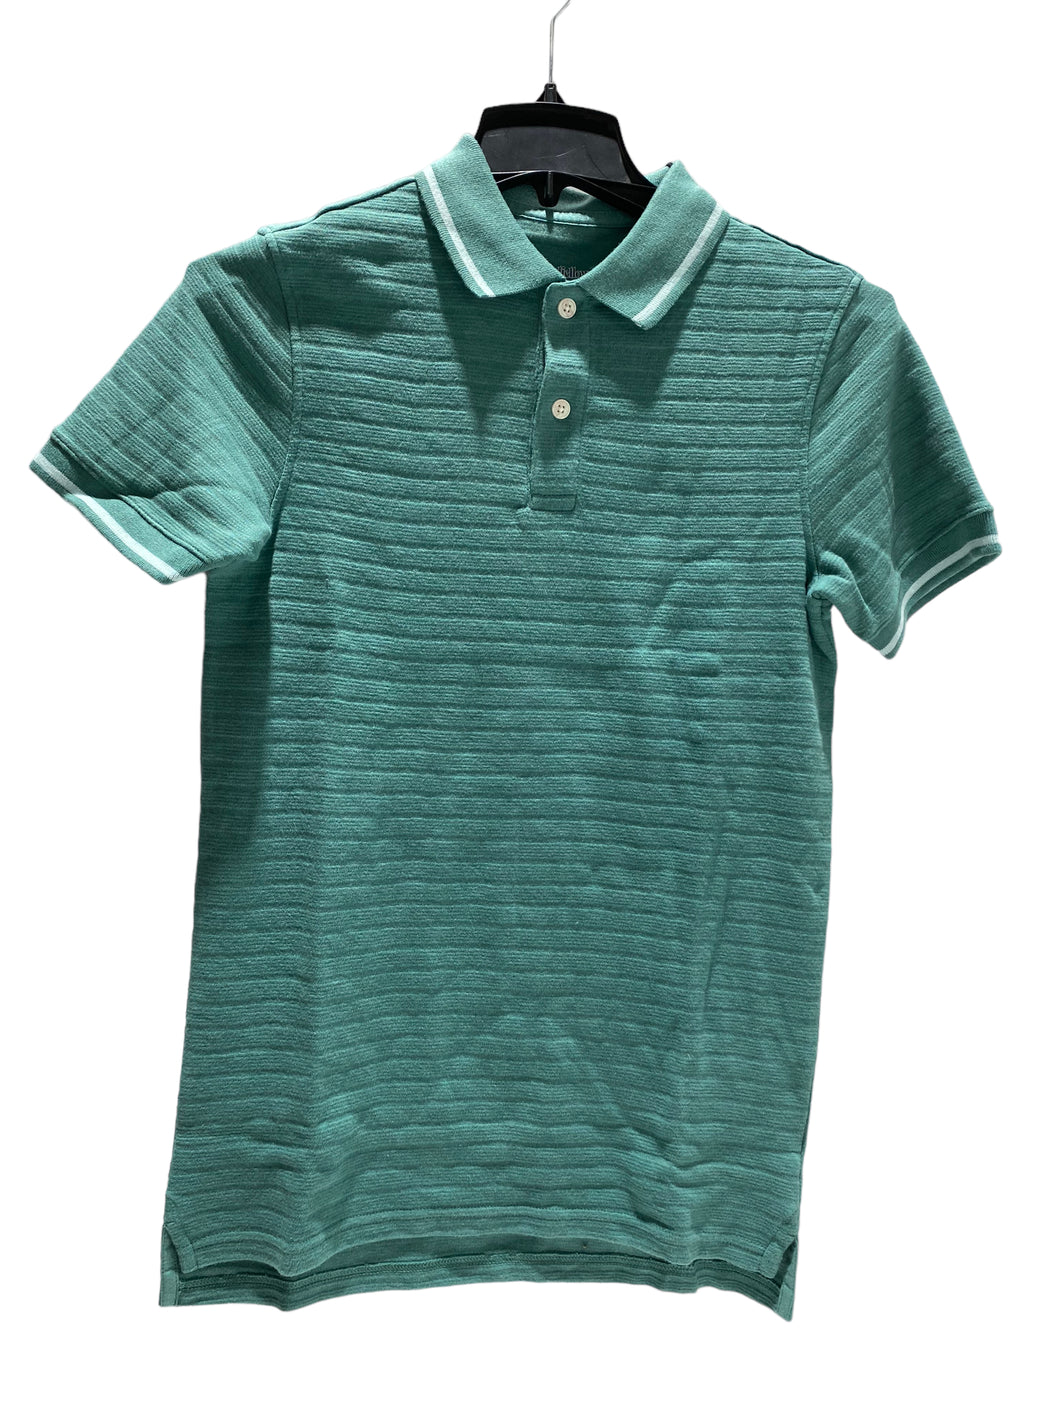 Men's Goodfellow & Co. Green Short Sleeve Shirt Size-L - FreemanLiquidators - [product_description]